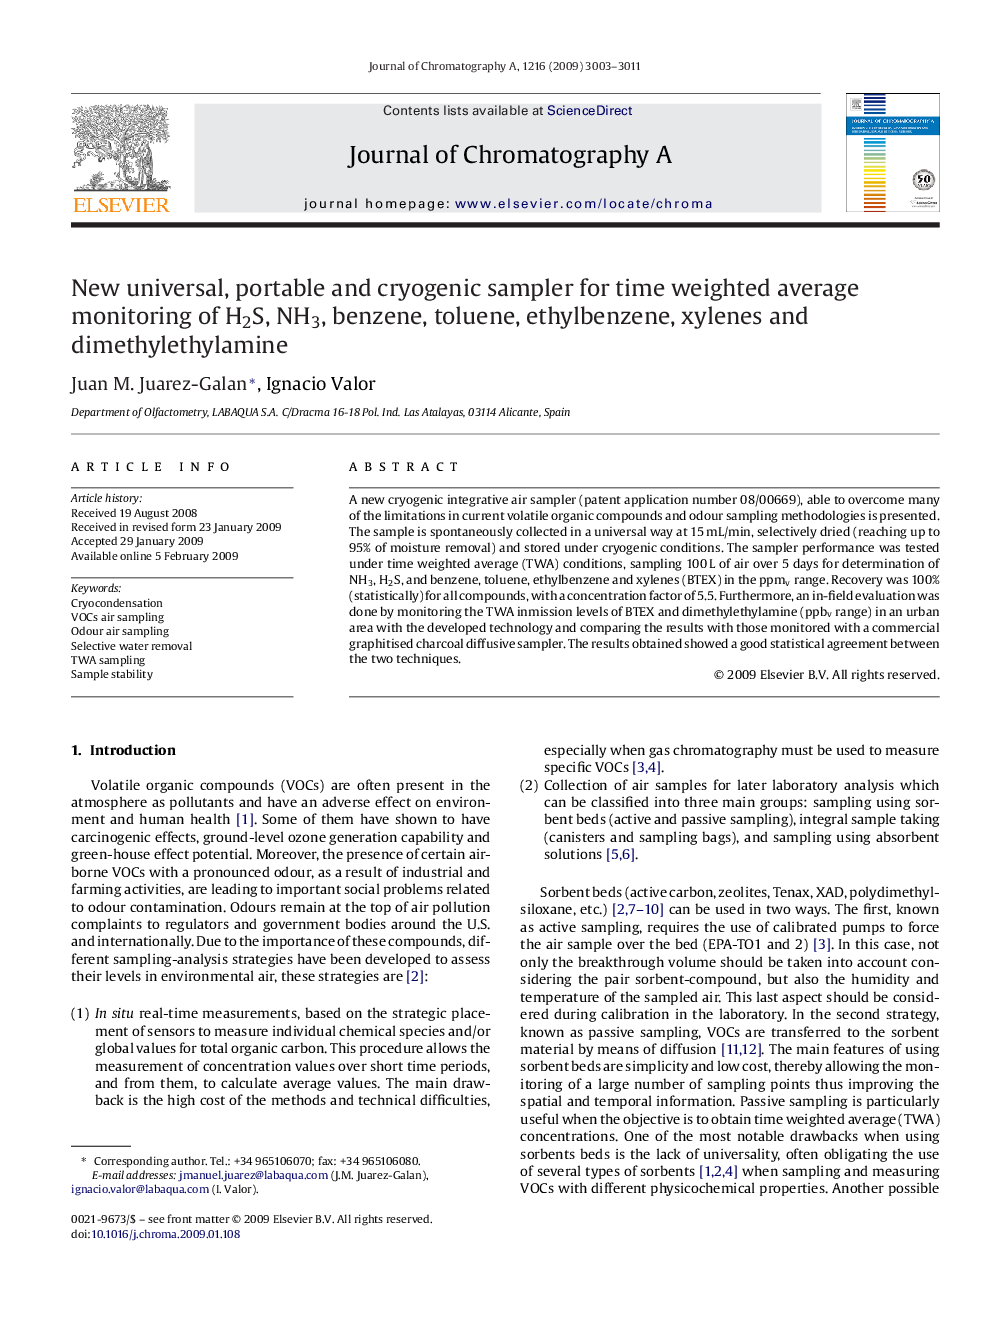 New universal, portable and cryogenic sampler for time weighted average monitoring of H2S, NH3, benzene, toluene, ethylbenzene, xylenes and dimethylethylamine